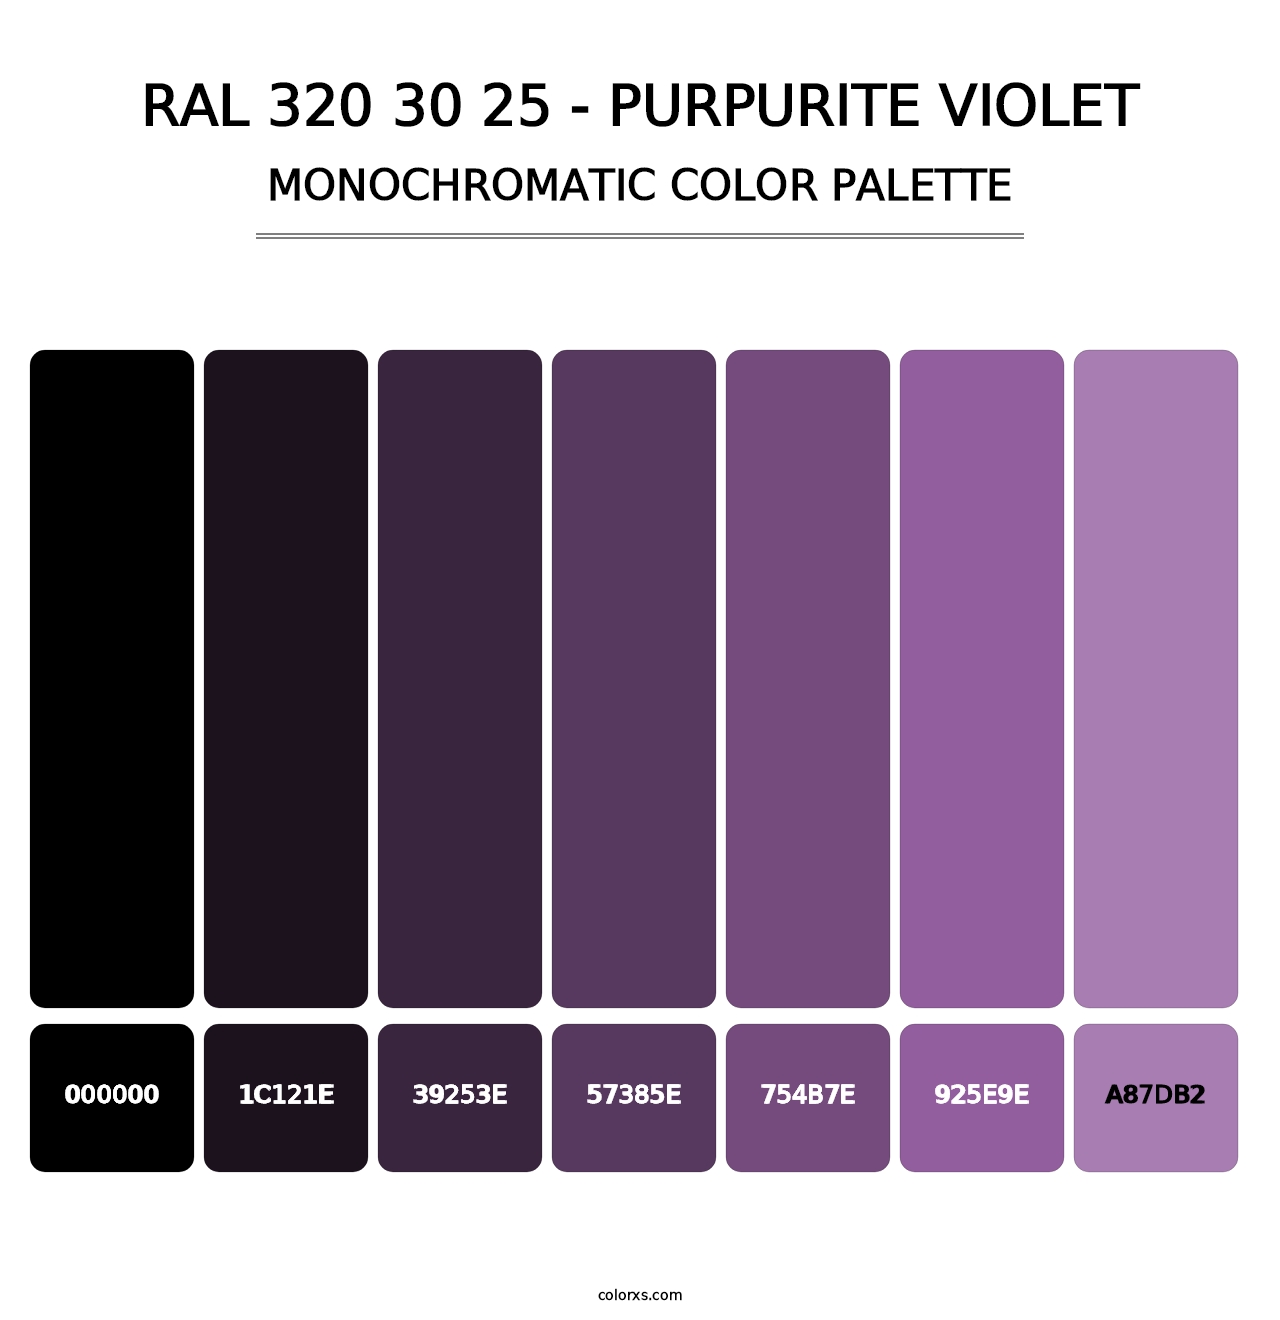 RAL 320 30 25 - Purpurite Violet - Monochromatic Color Palette